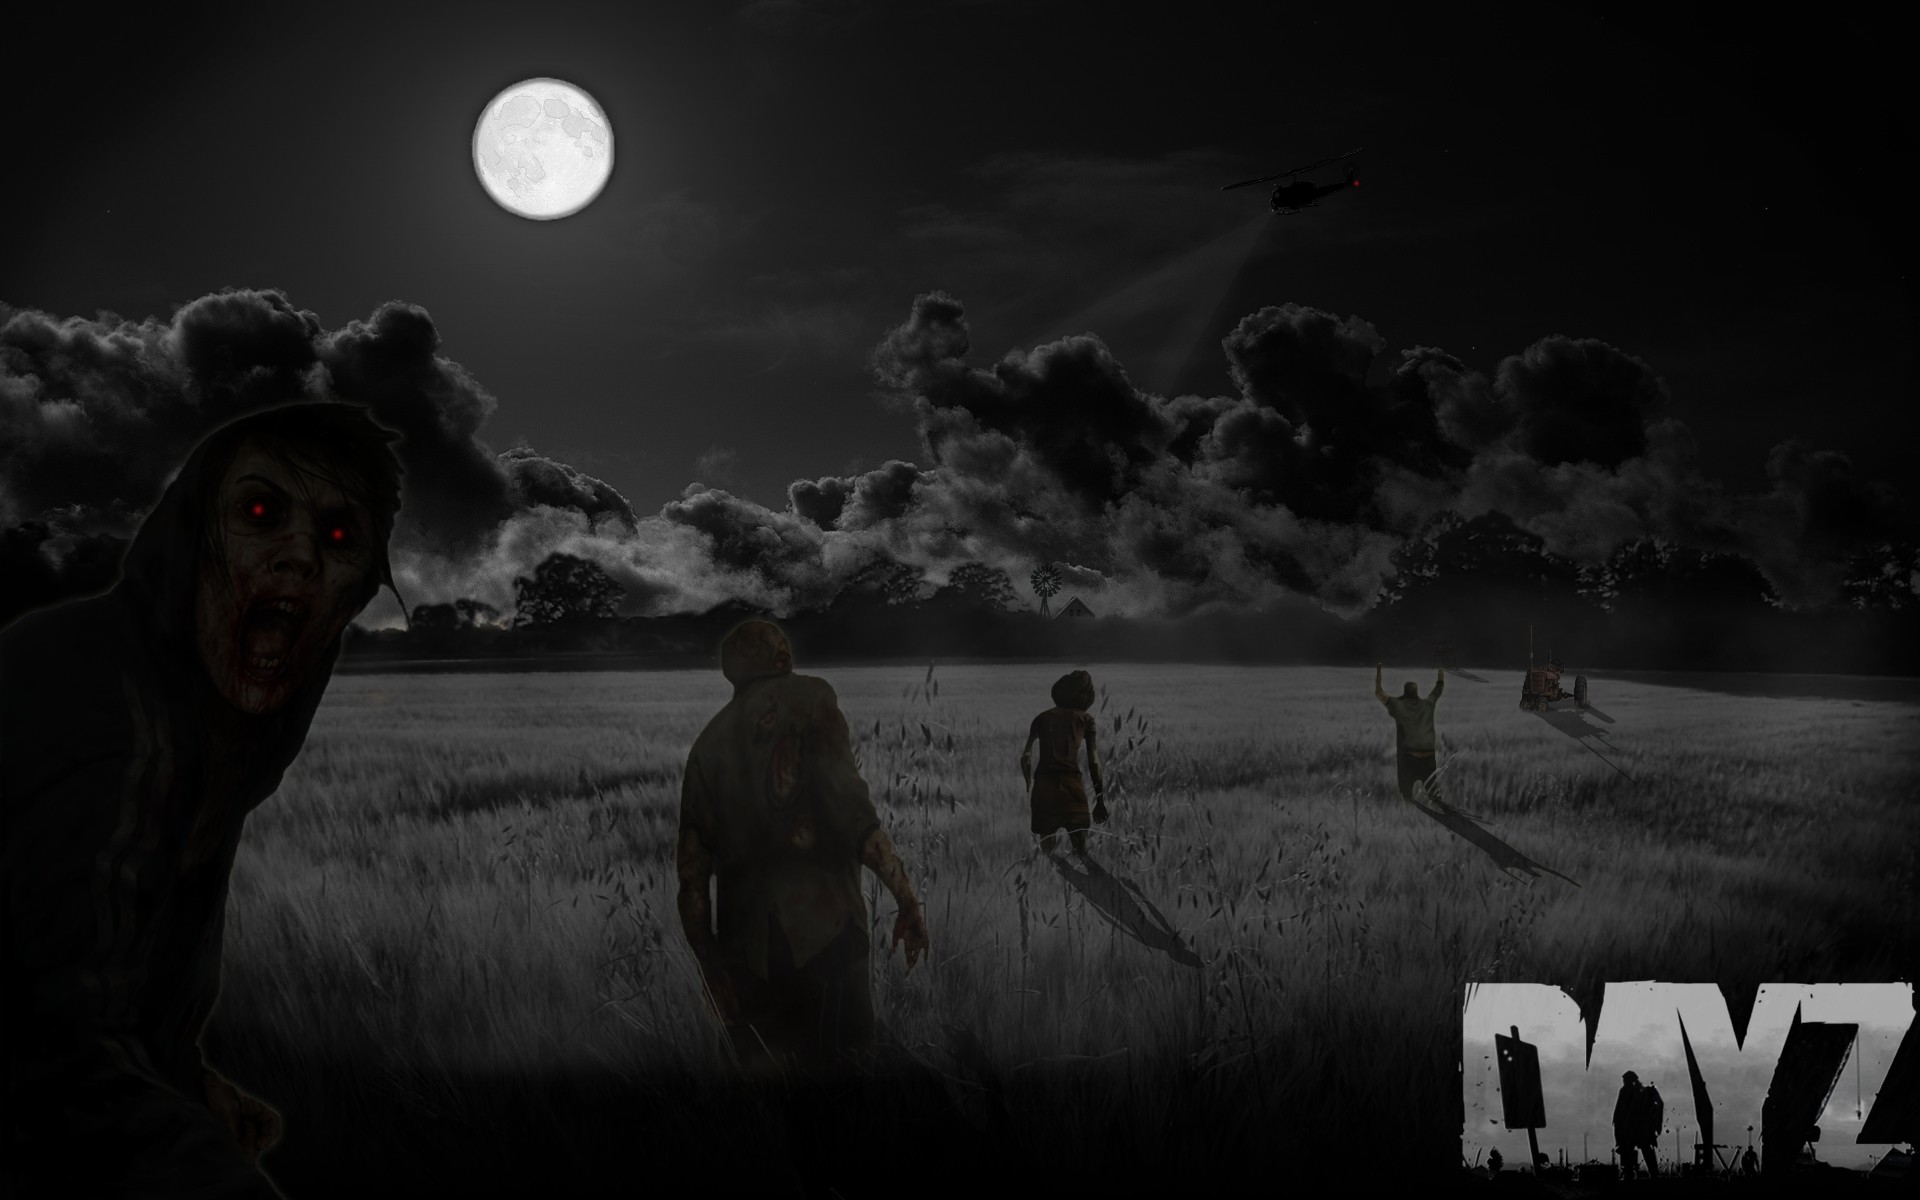 Wallpaper on X: DayZ horrer movie zombies dayz mobile wallpaper